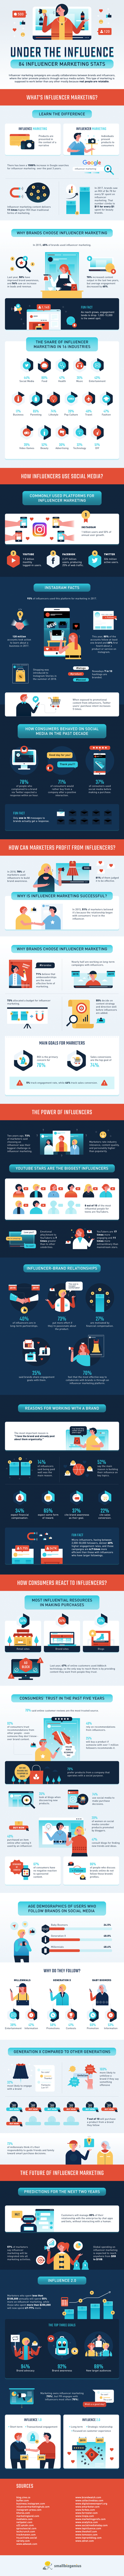 Influencer Marketing Infographic